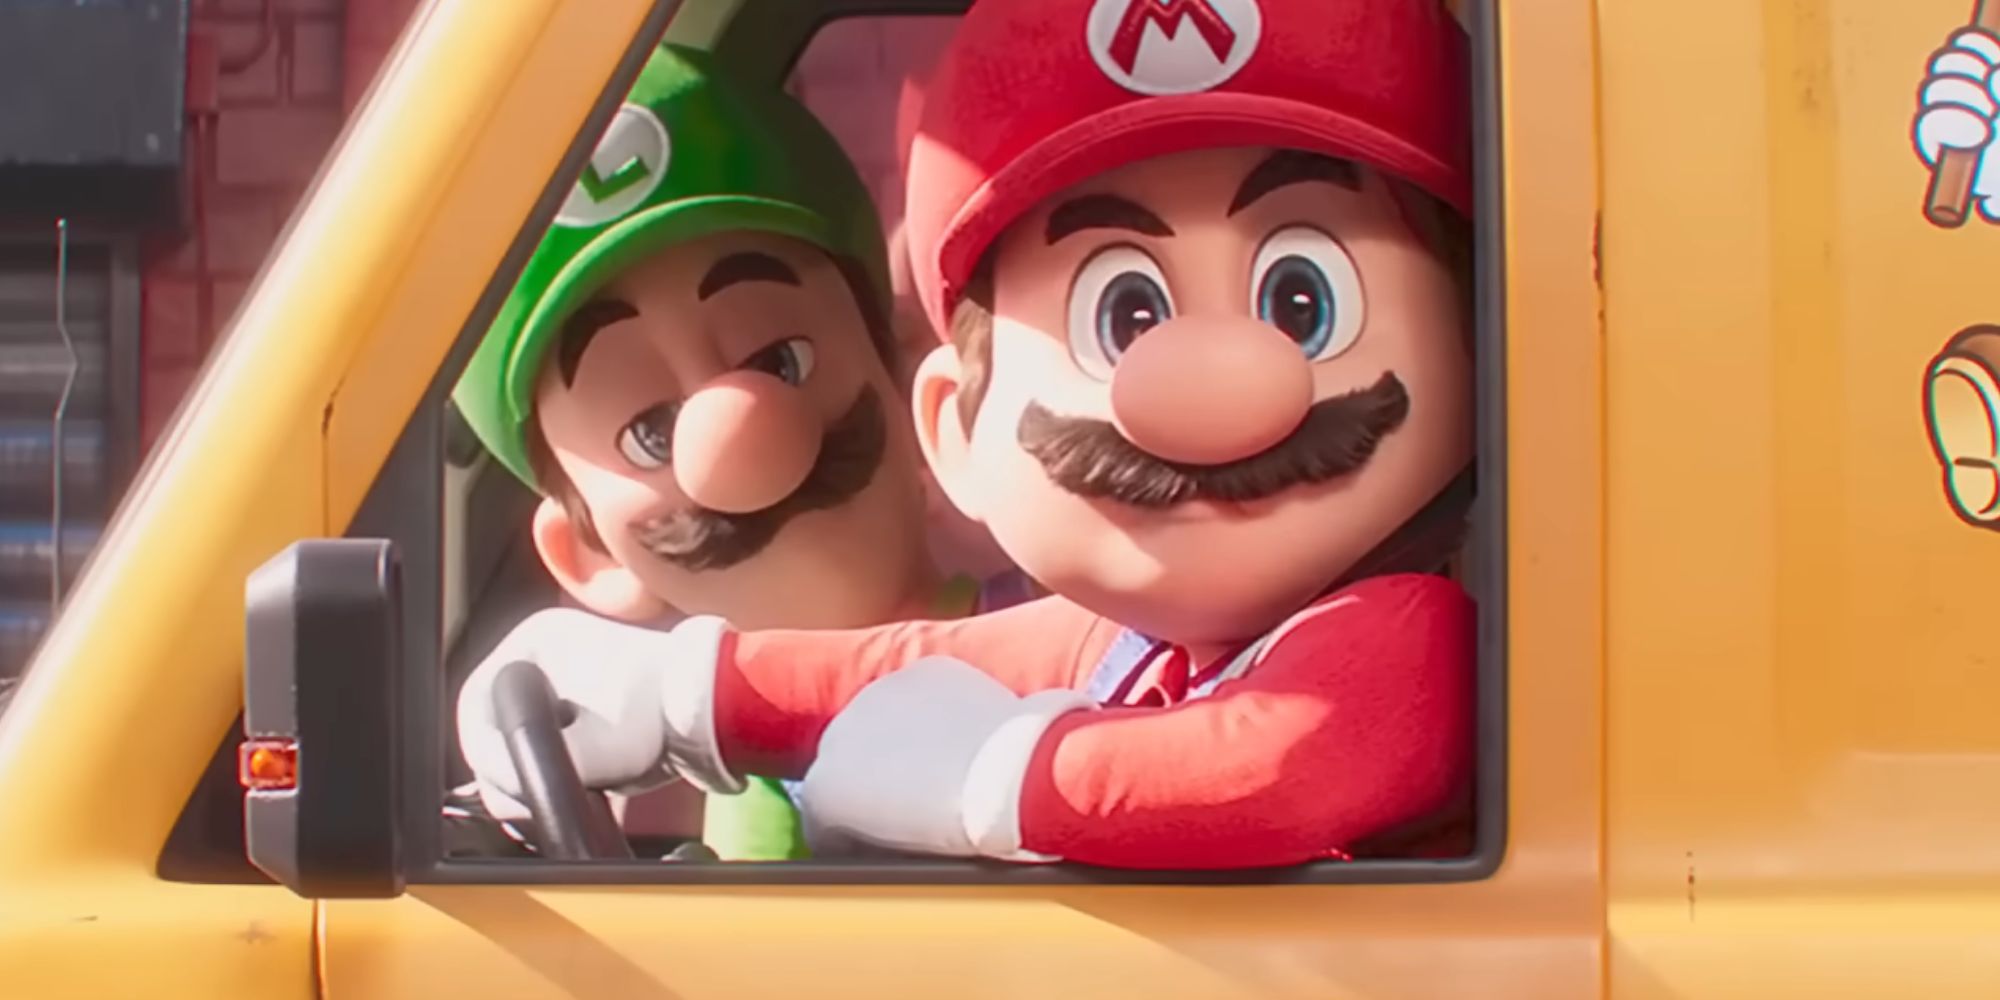 Mario and Luigi looking out the van window